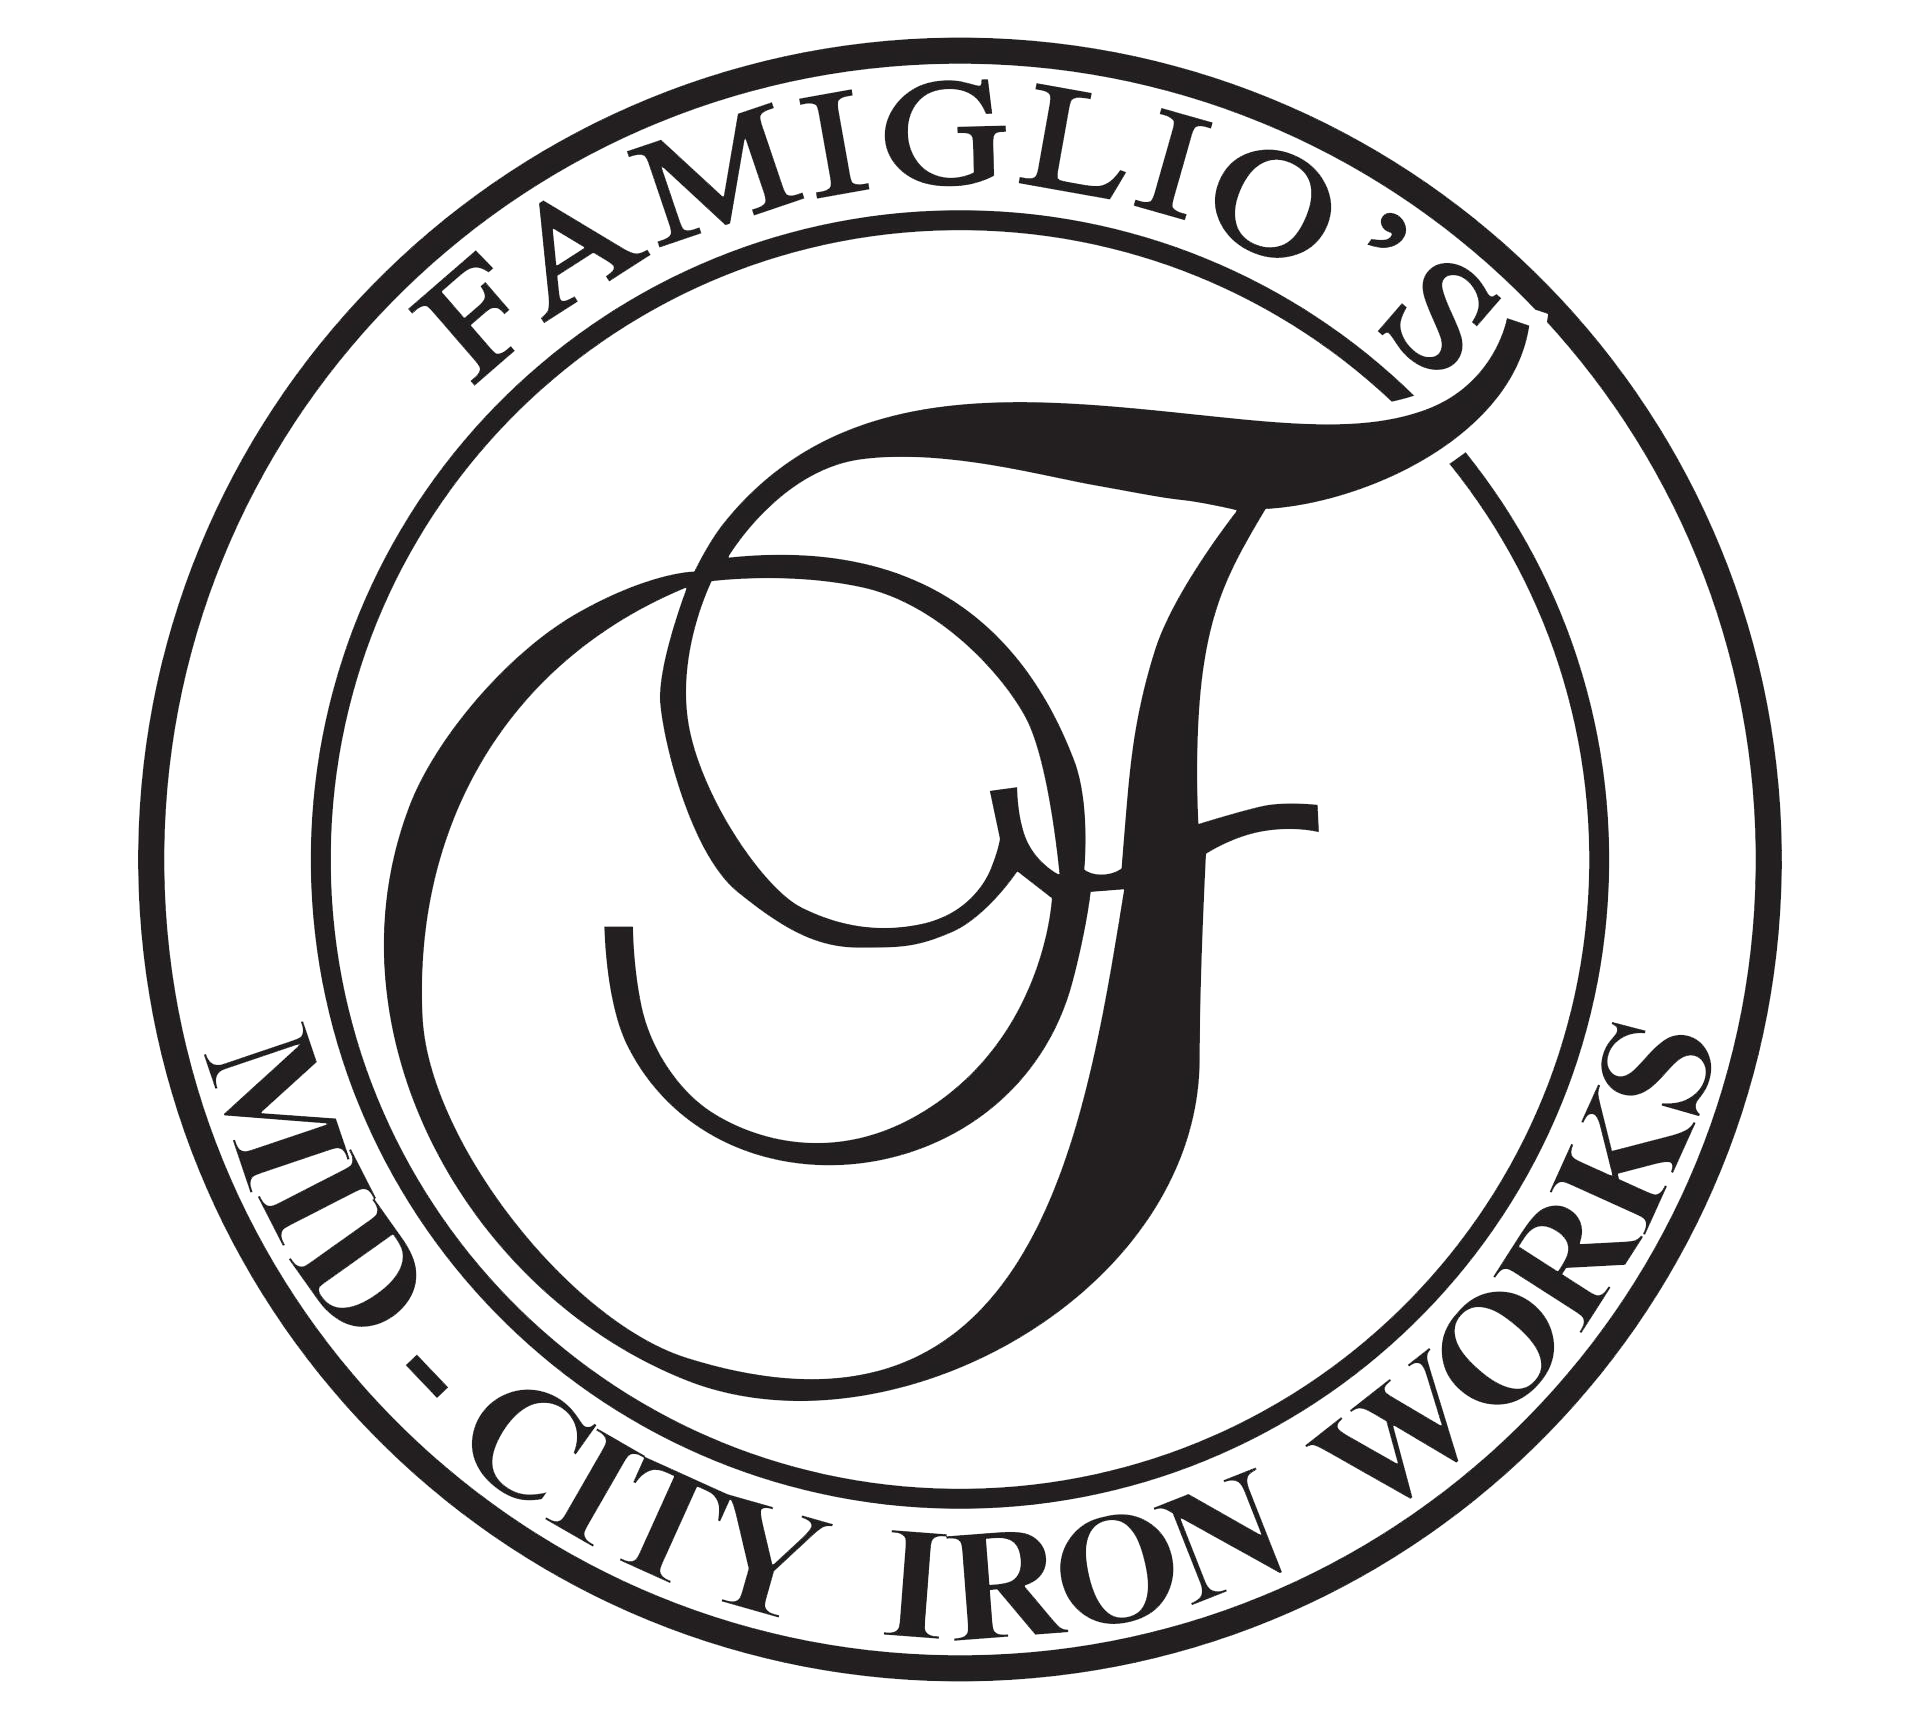 Famiglio Mid-City Ironworks - Logo